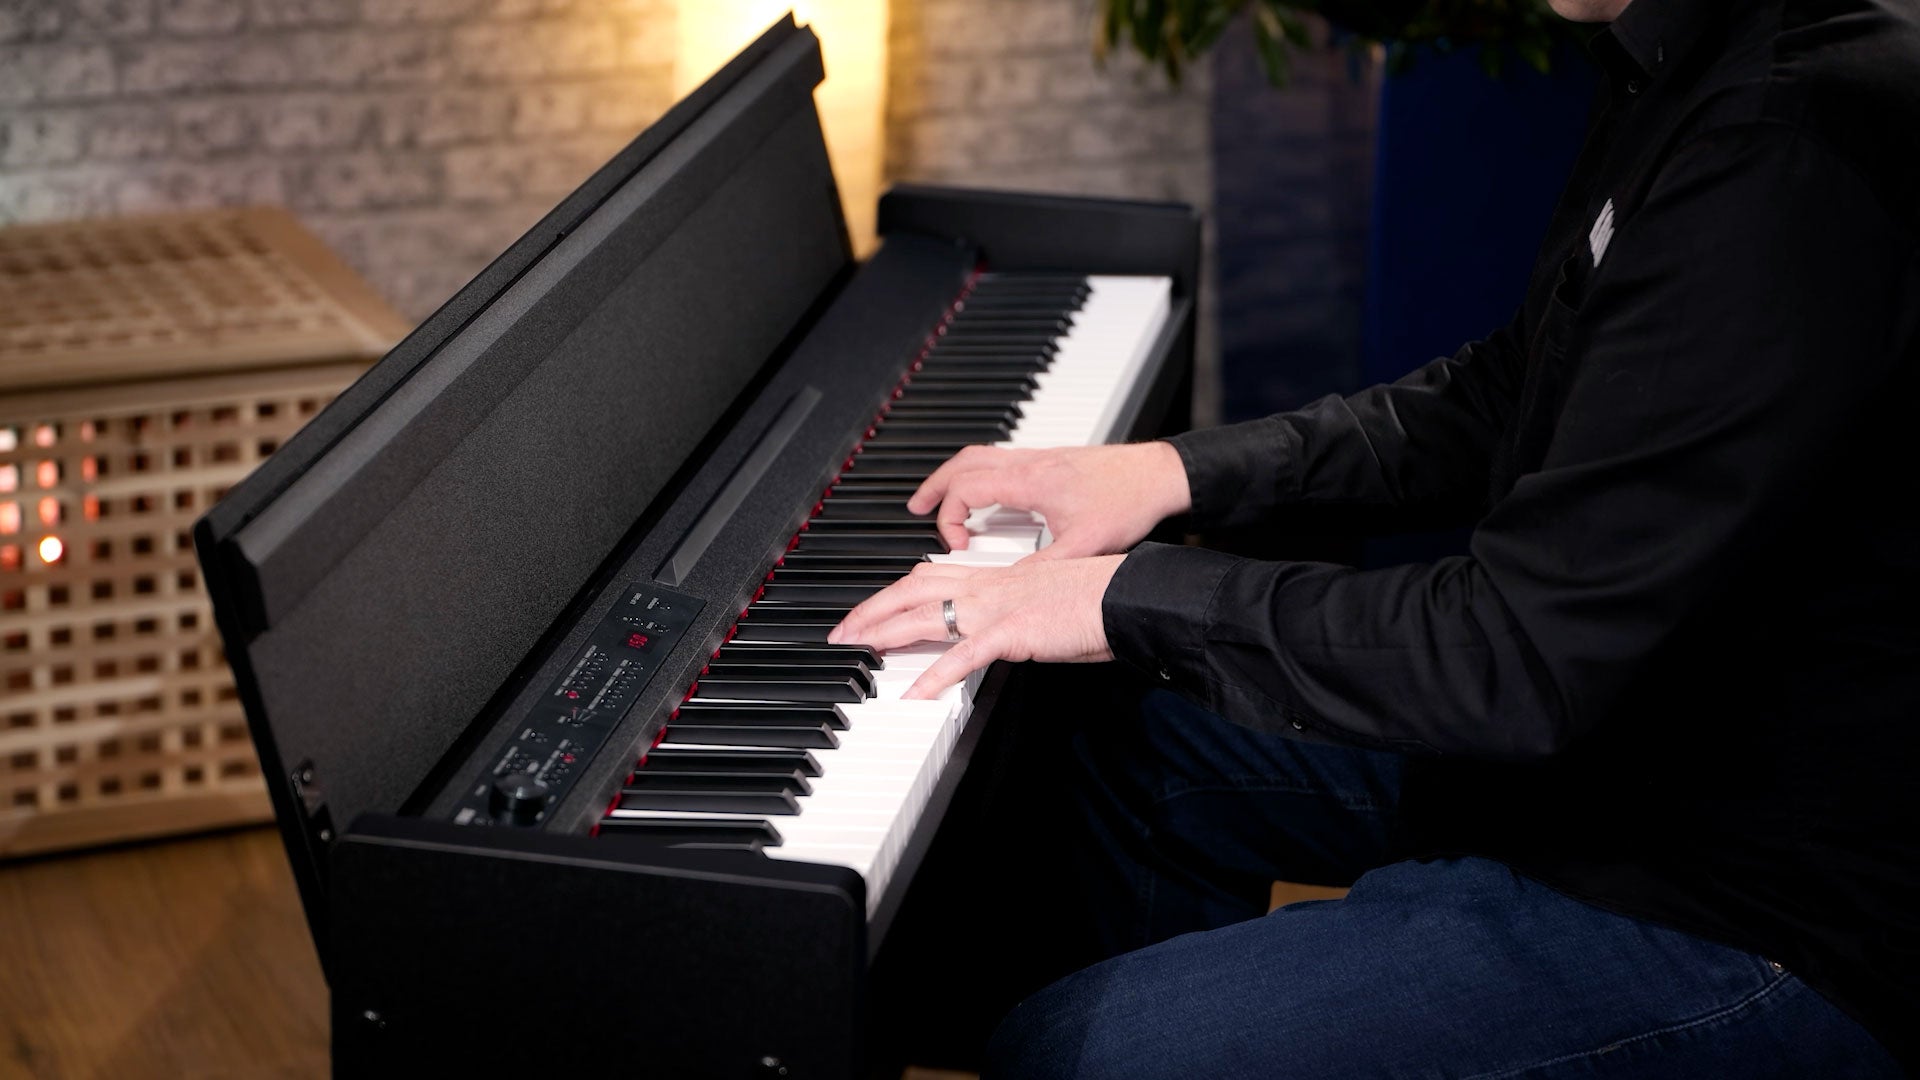 Discover the LP-380U digital piano